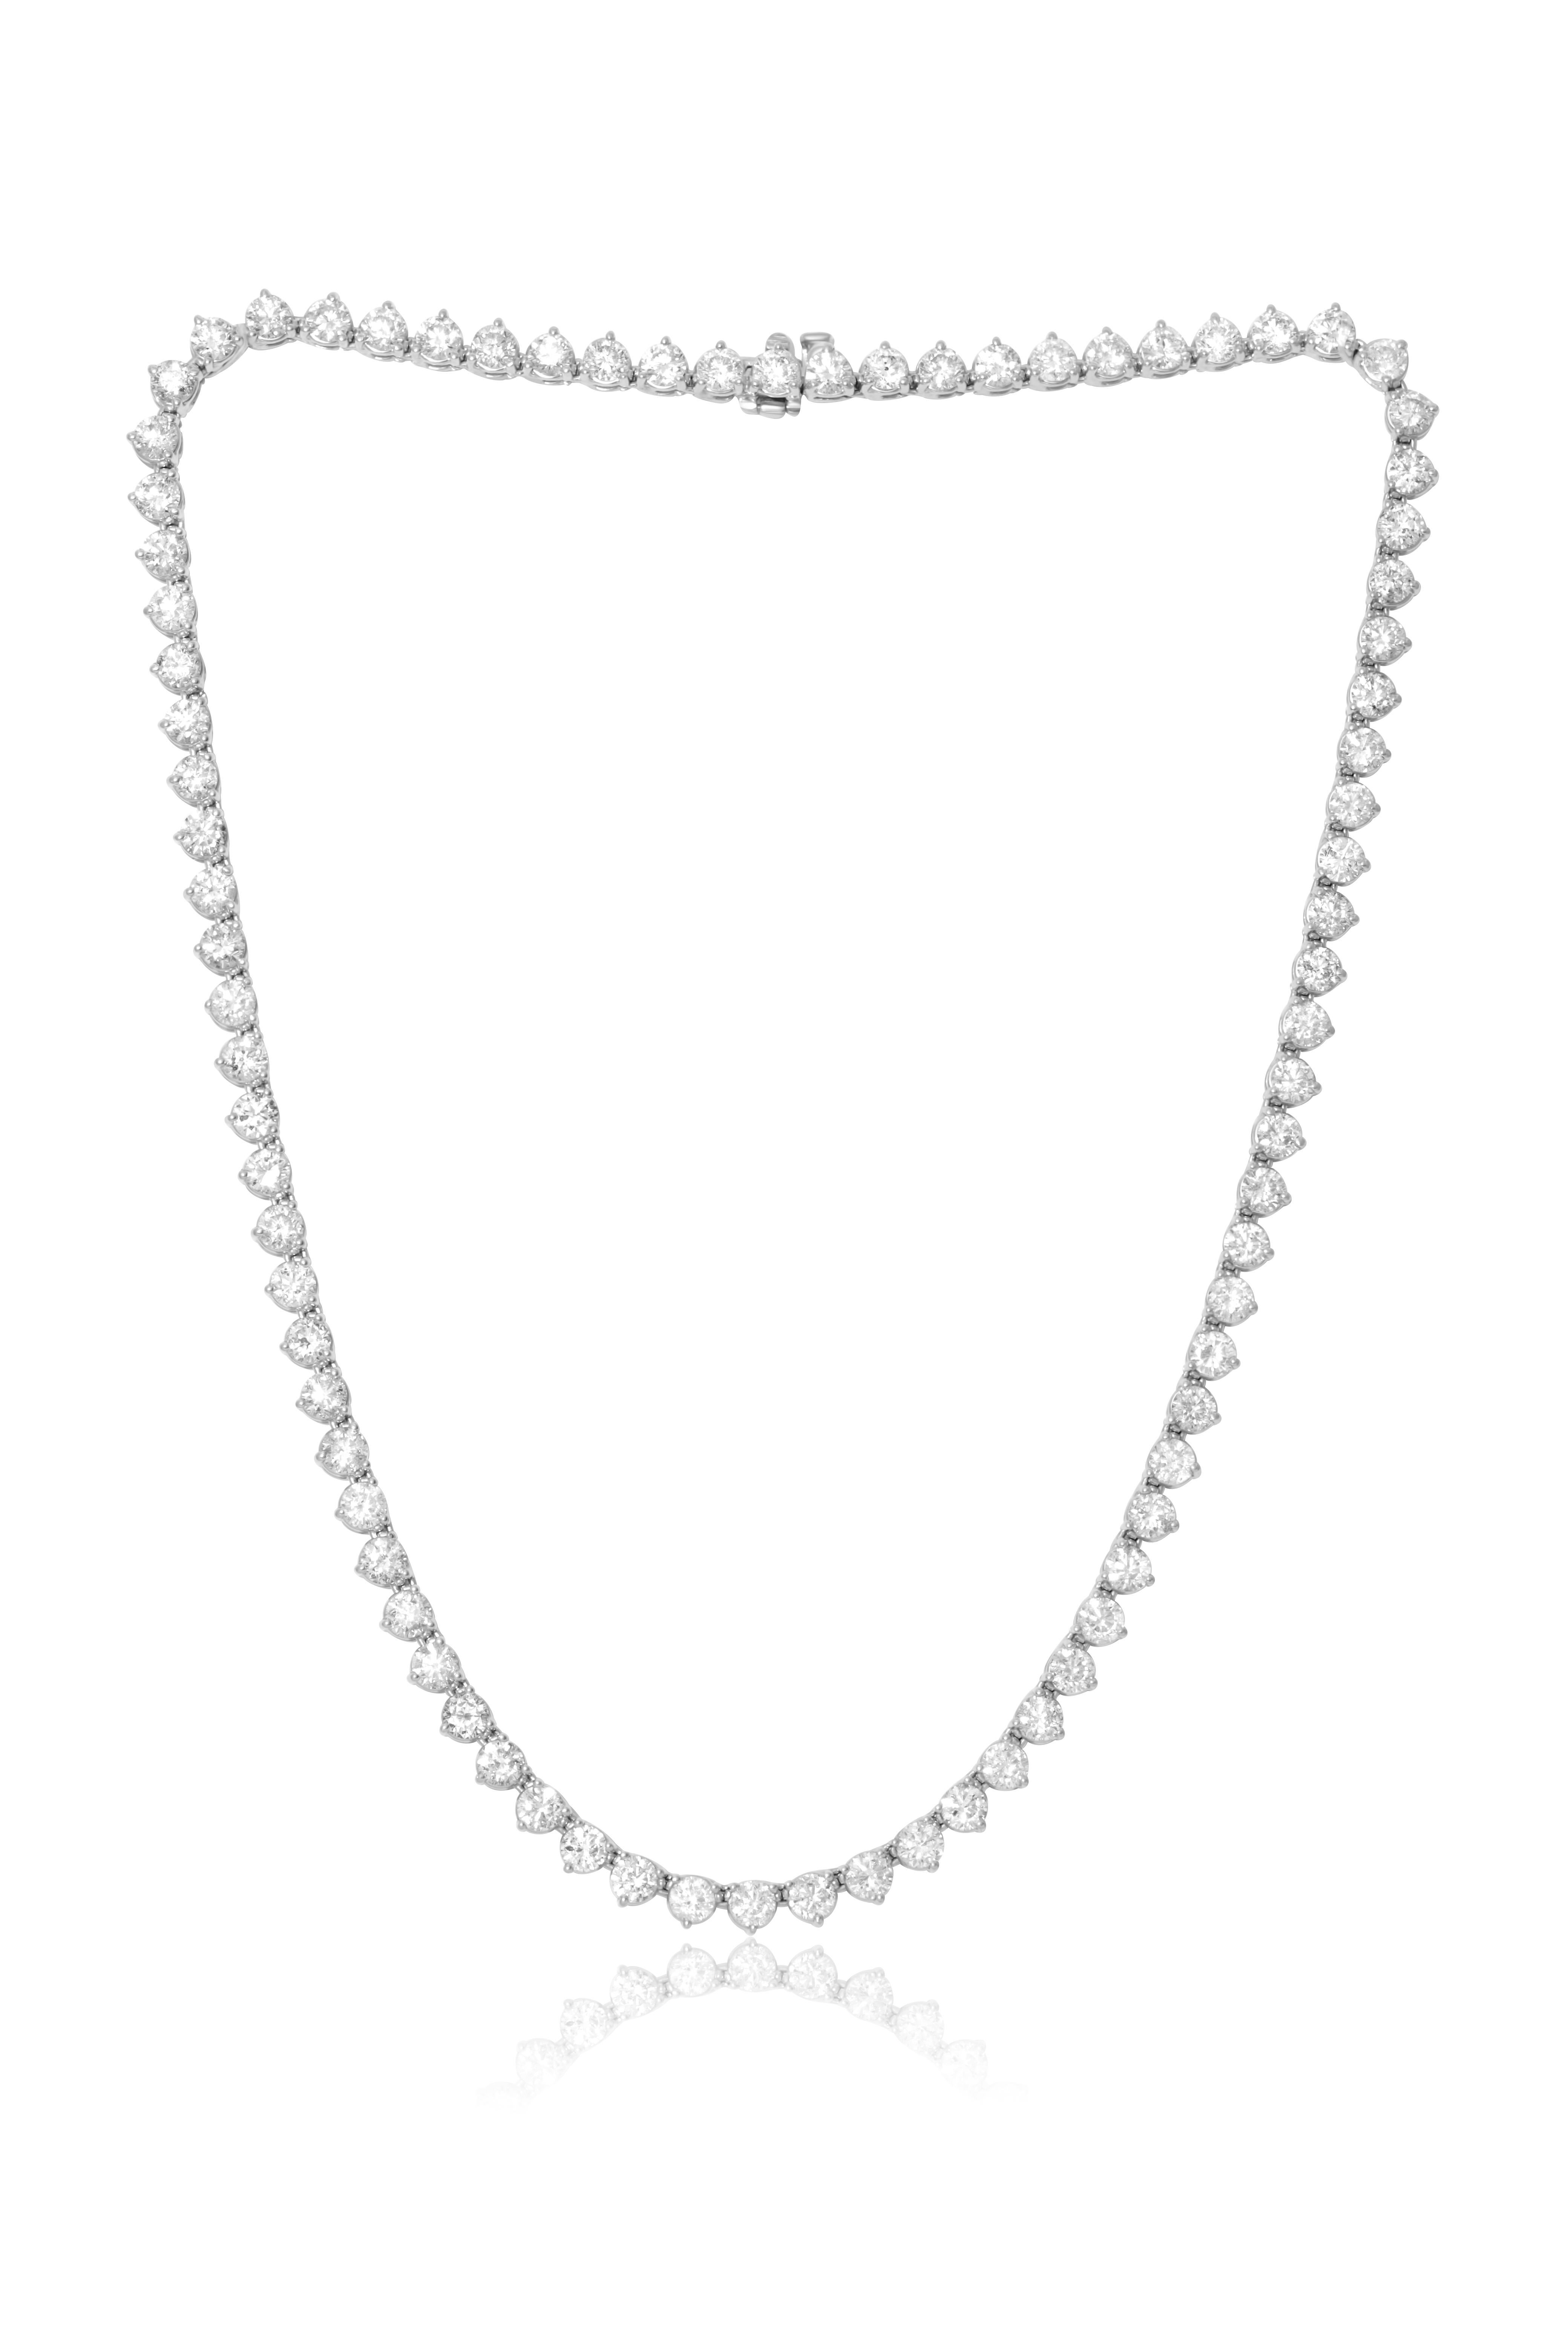 Round Cut Diana M. Custom 10.00 cts 3 prong diamond 18k white gold tennis necklace 16.5